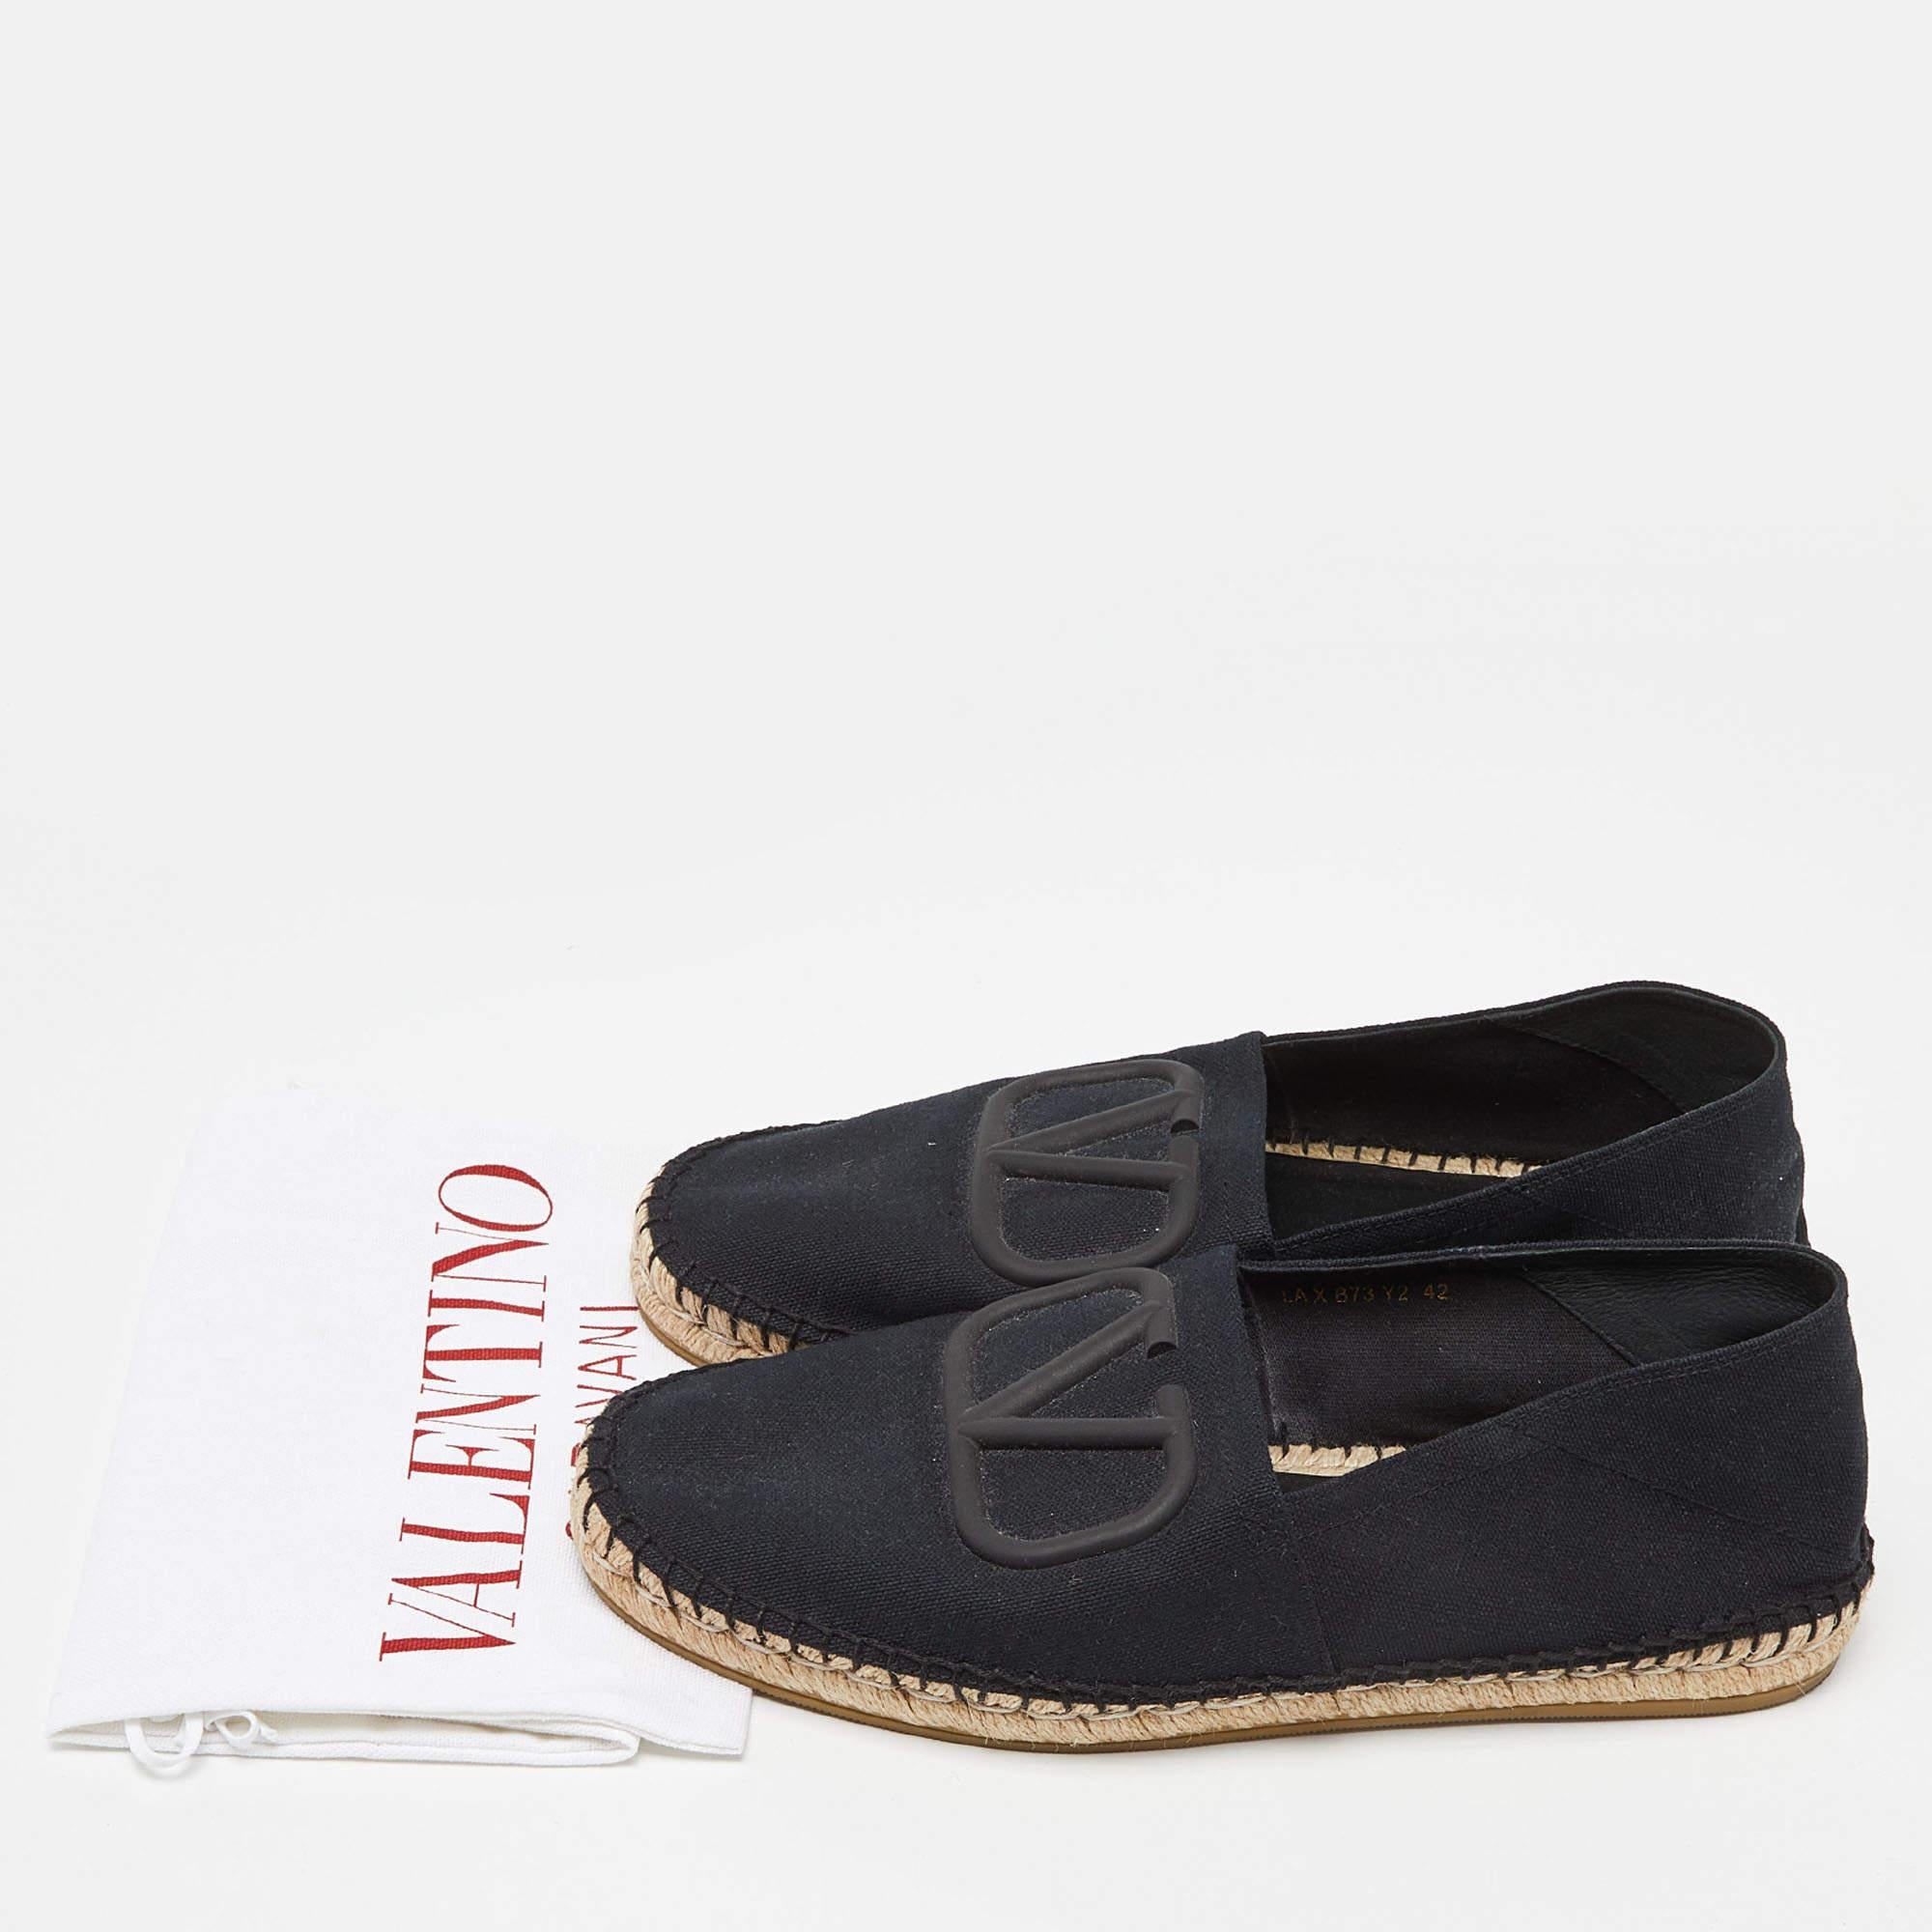 Valentino Black Canvas VLogo Slip On Espadrilles Loafers Size 42 2